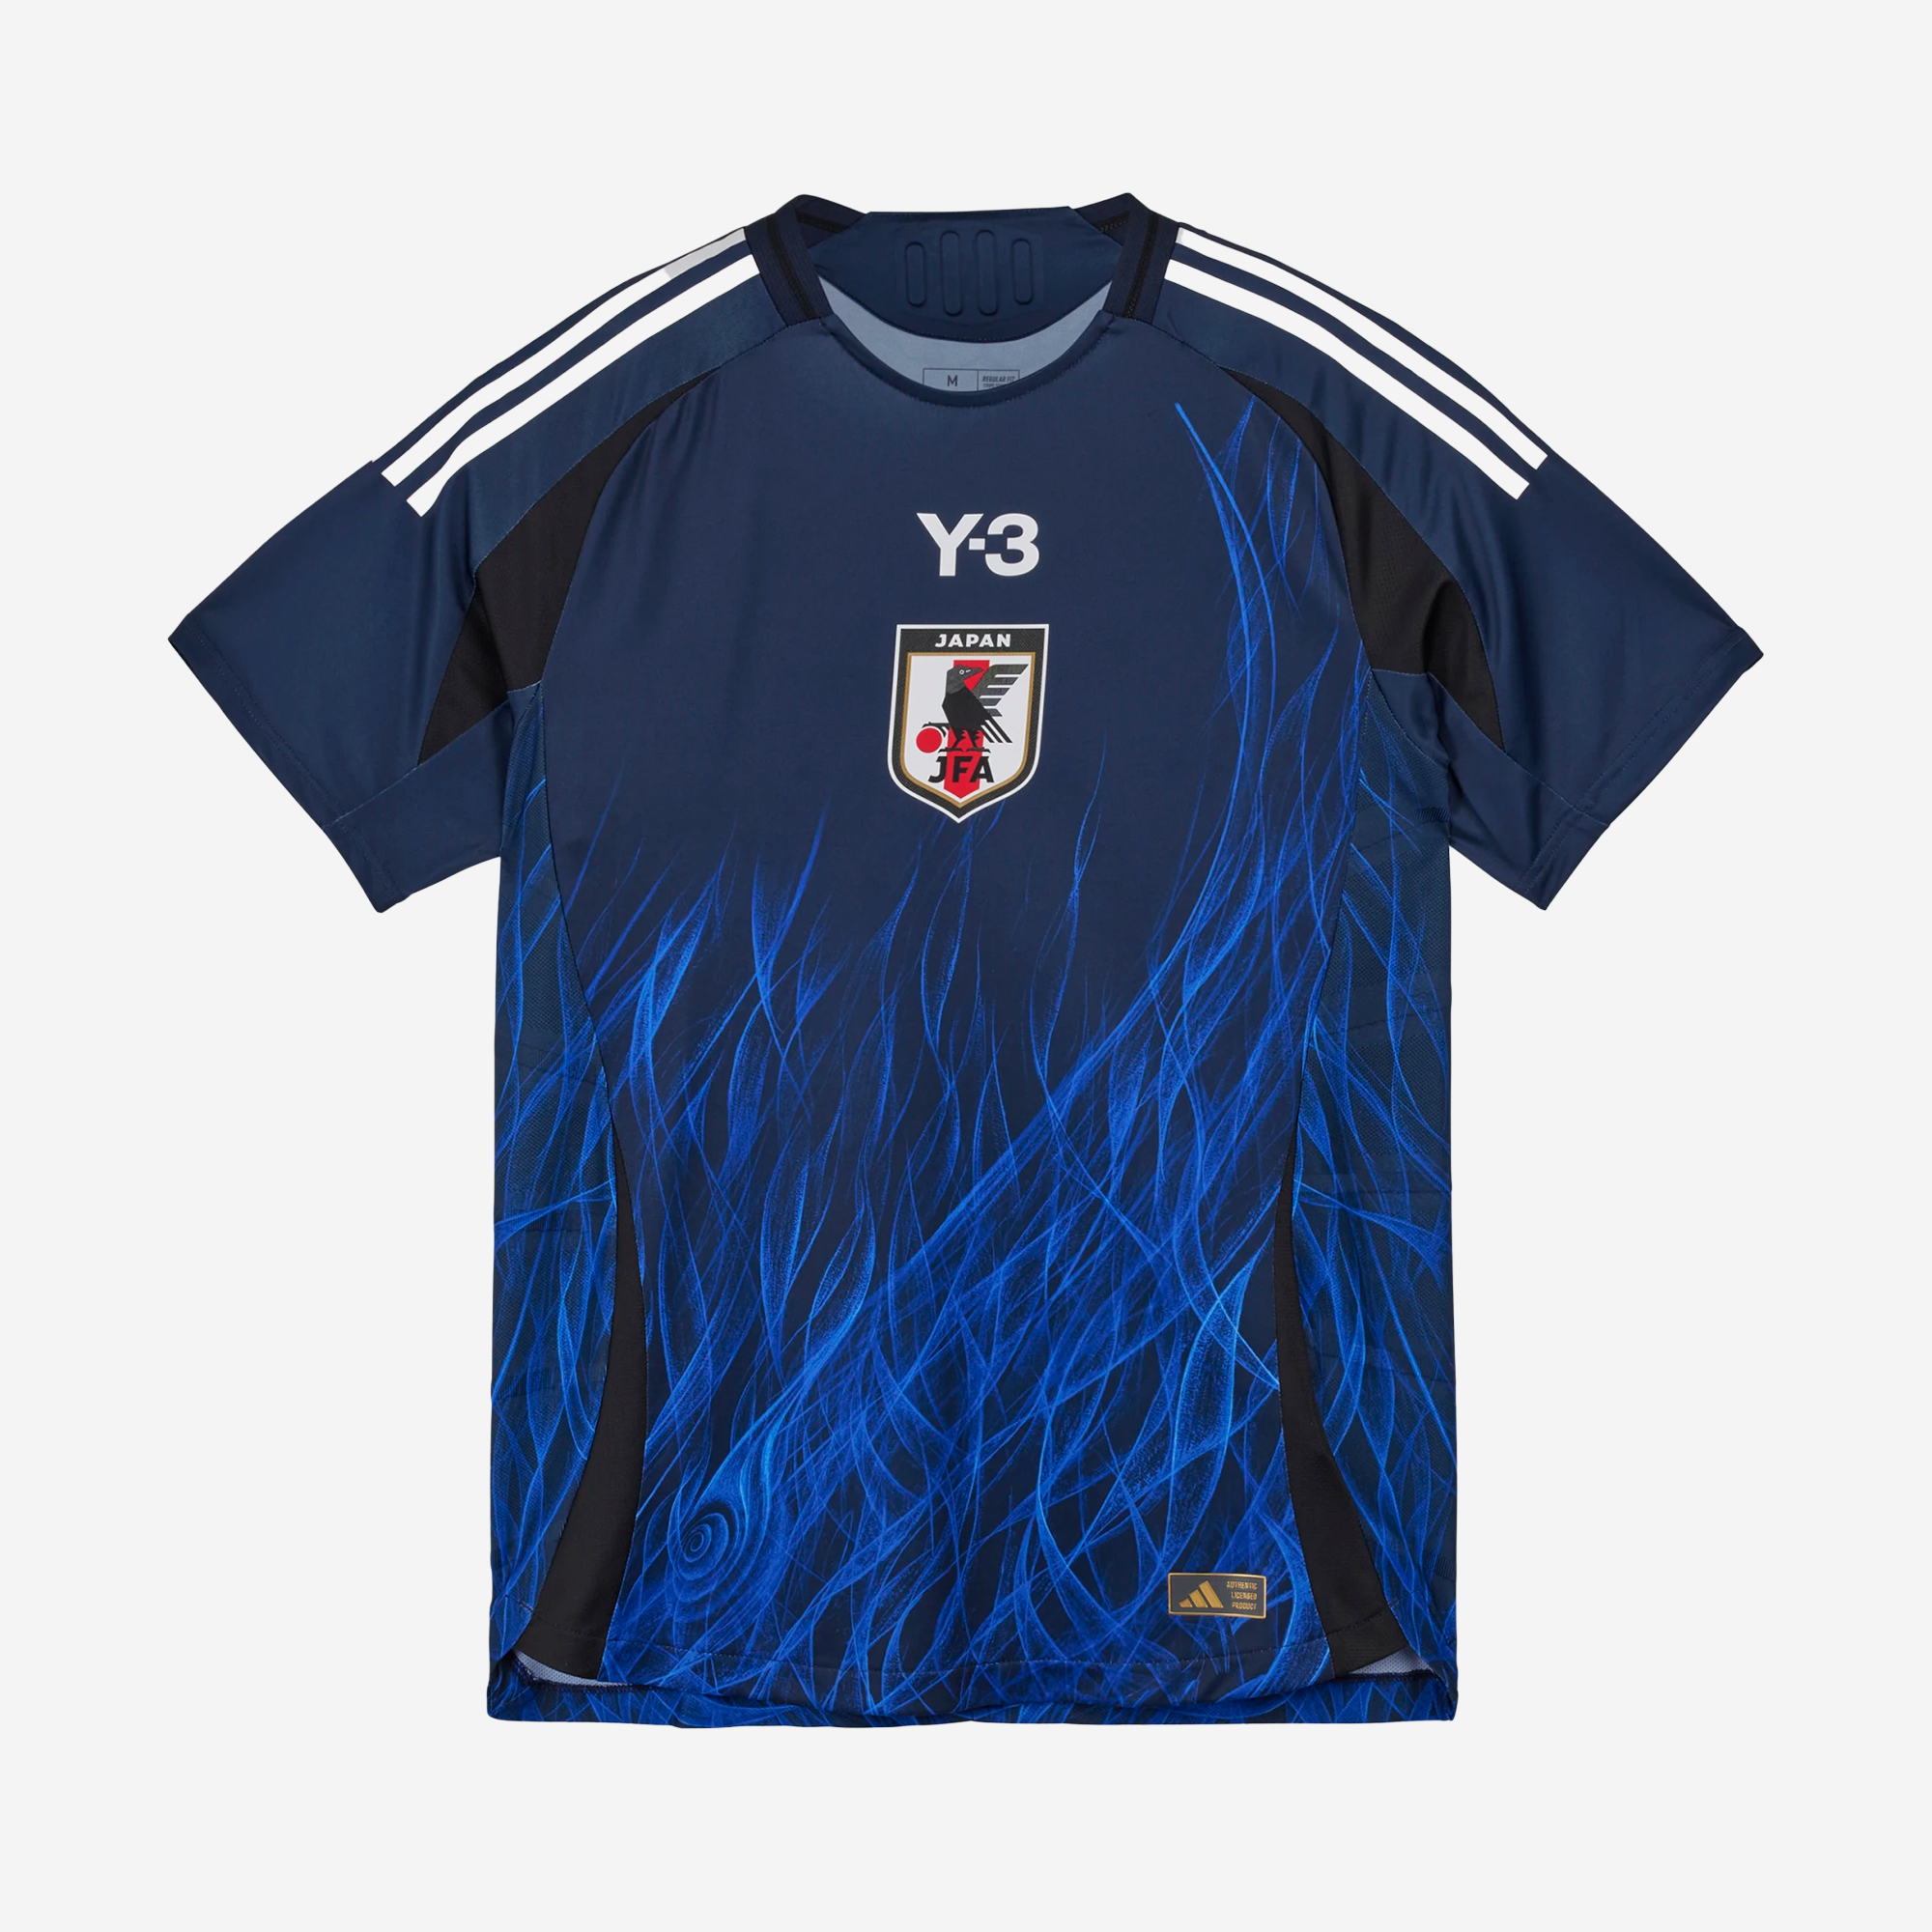 Y-3 手掛ける サッカー日本代表 新ユニフォームのオフィシャル画像がリーク